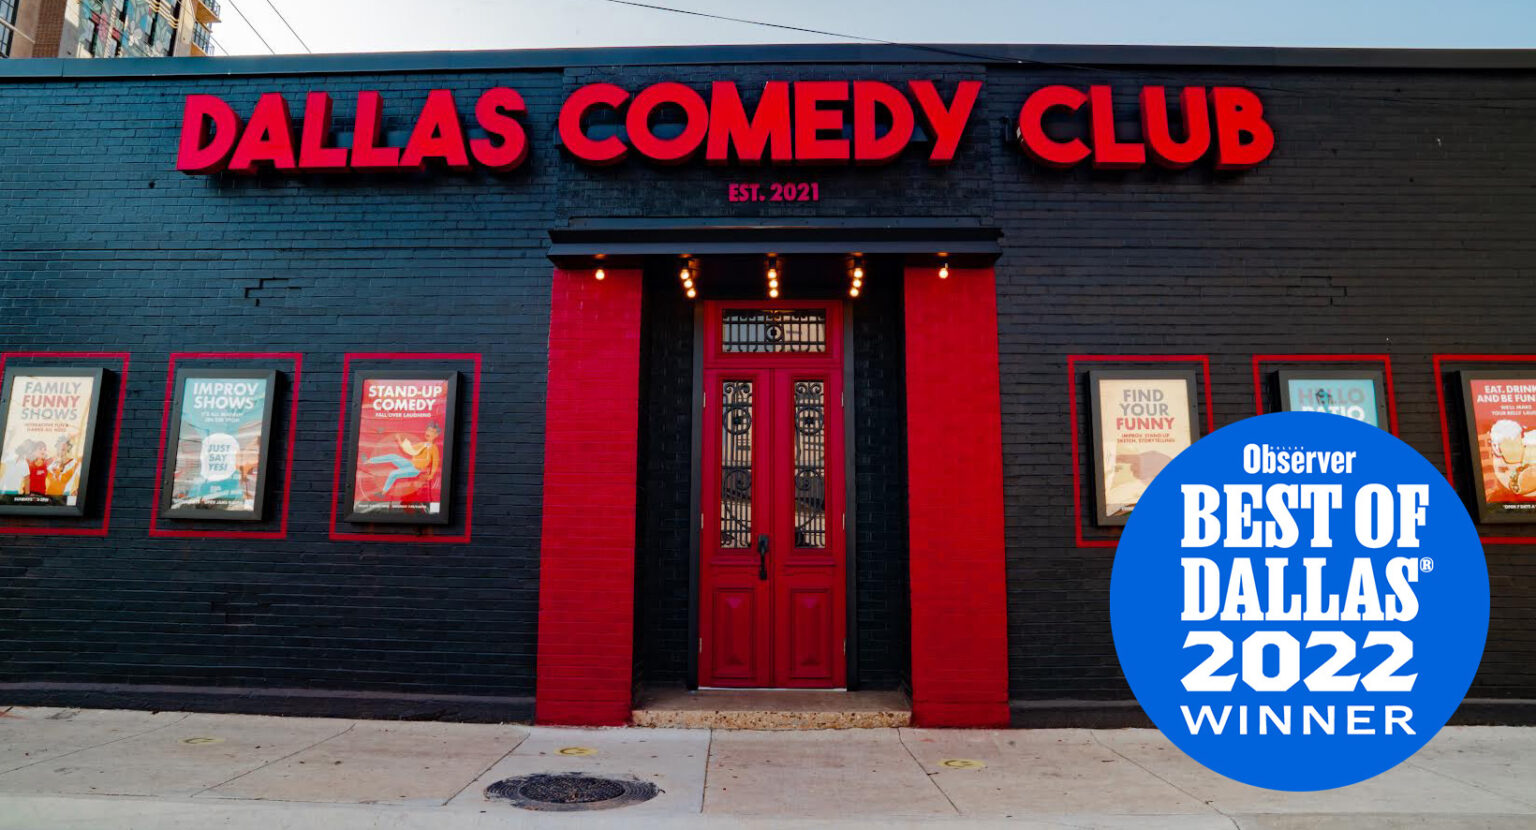 Dallas Comedy Club Comedy 5 nights a week! Improv, Standup, Sketch